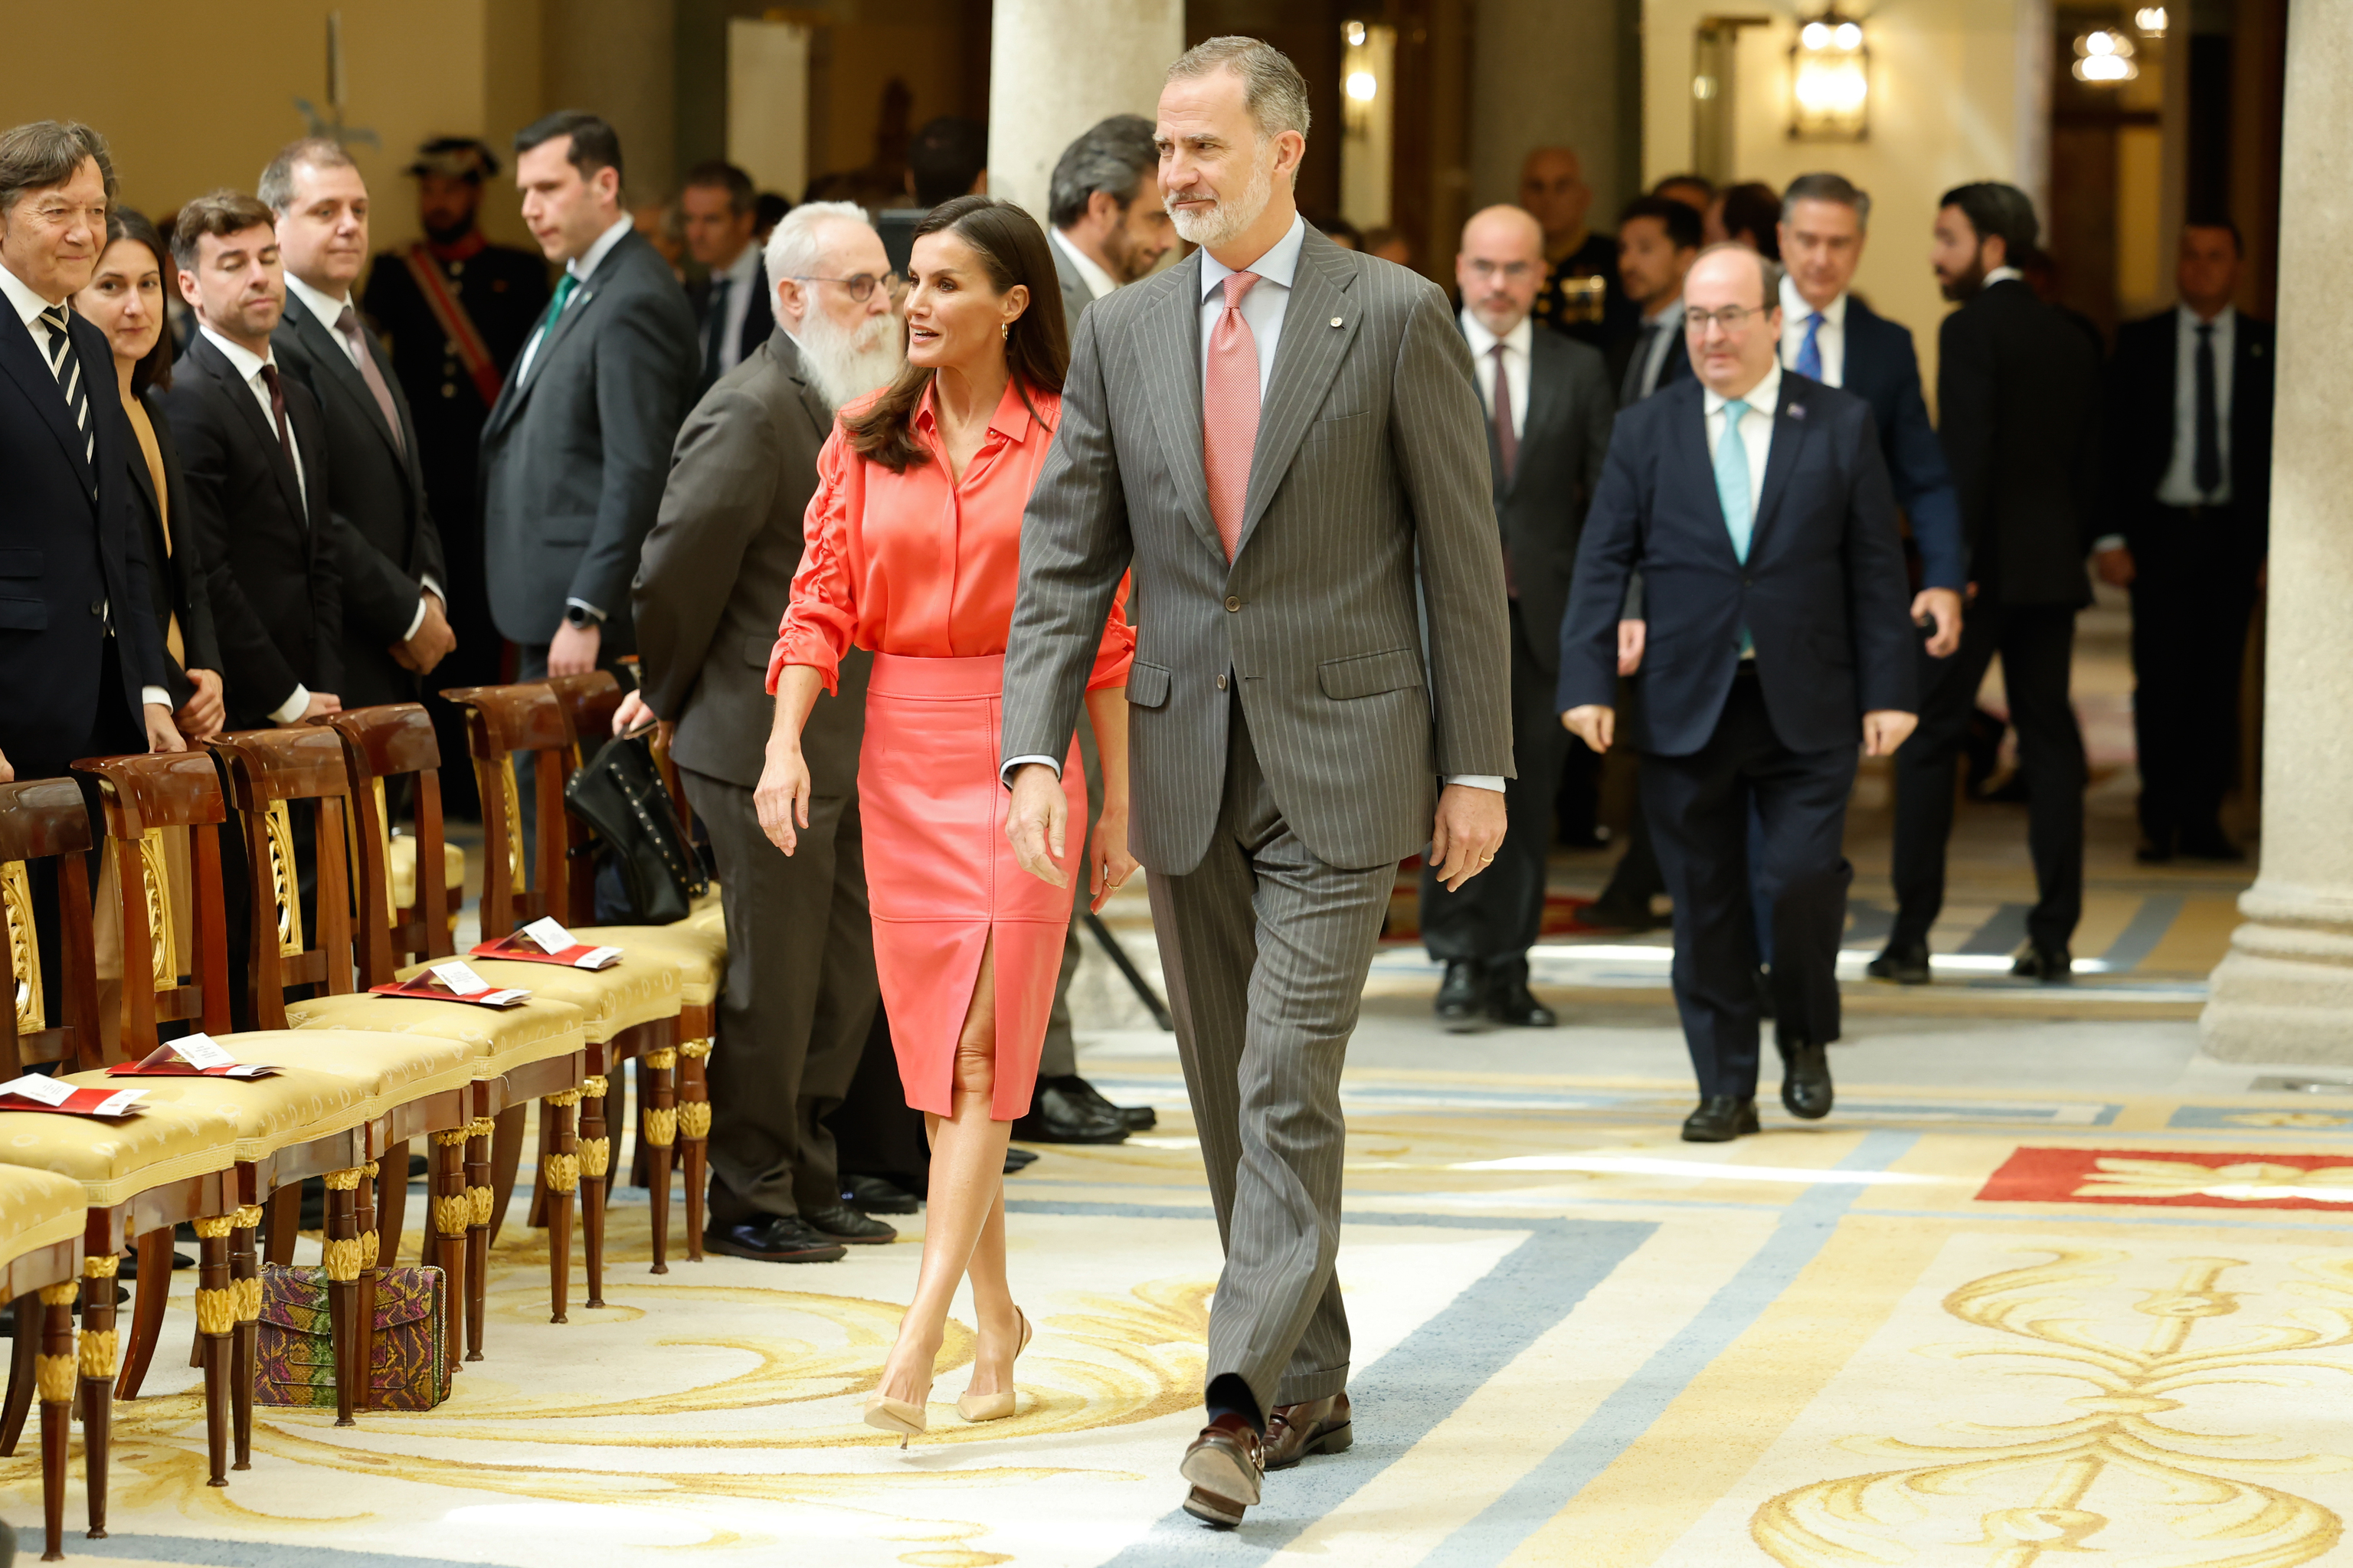 ALT: La Reina Letizia estrena su falda de cuero ms atrevida, abertura mediante